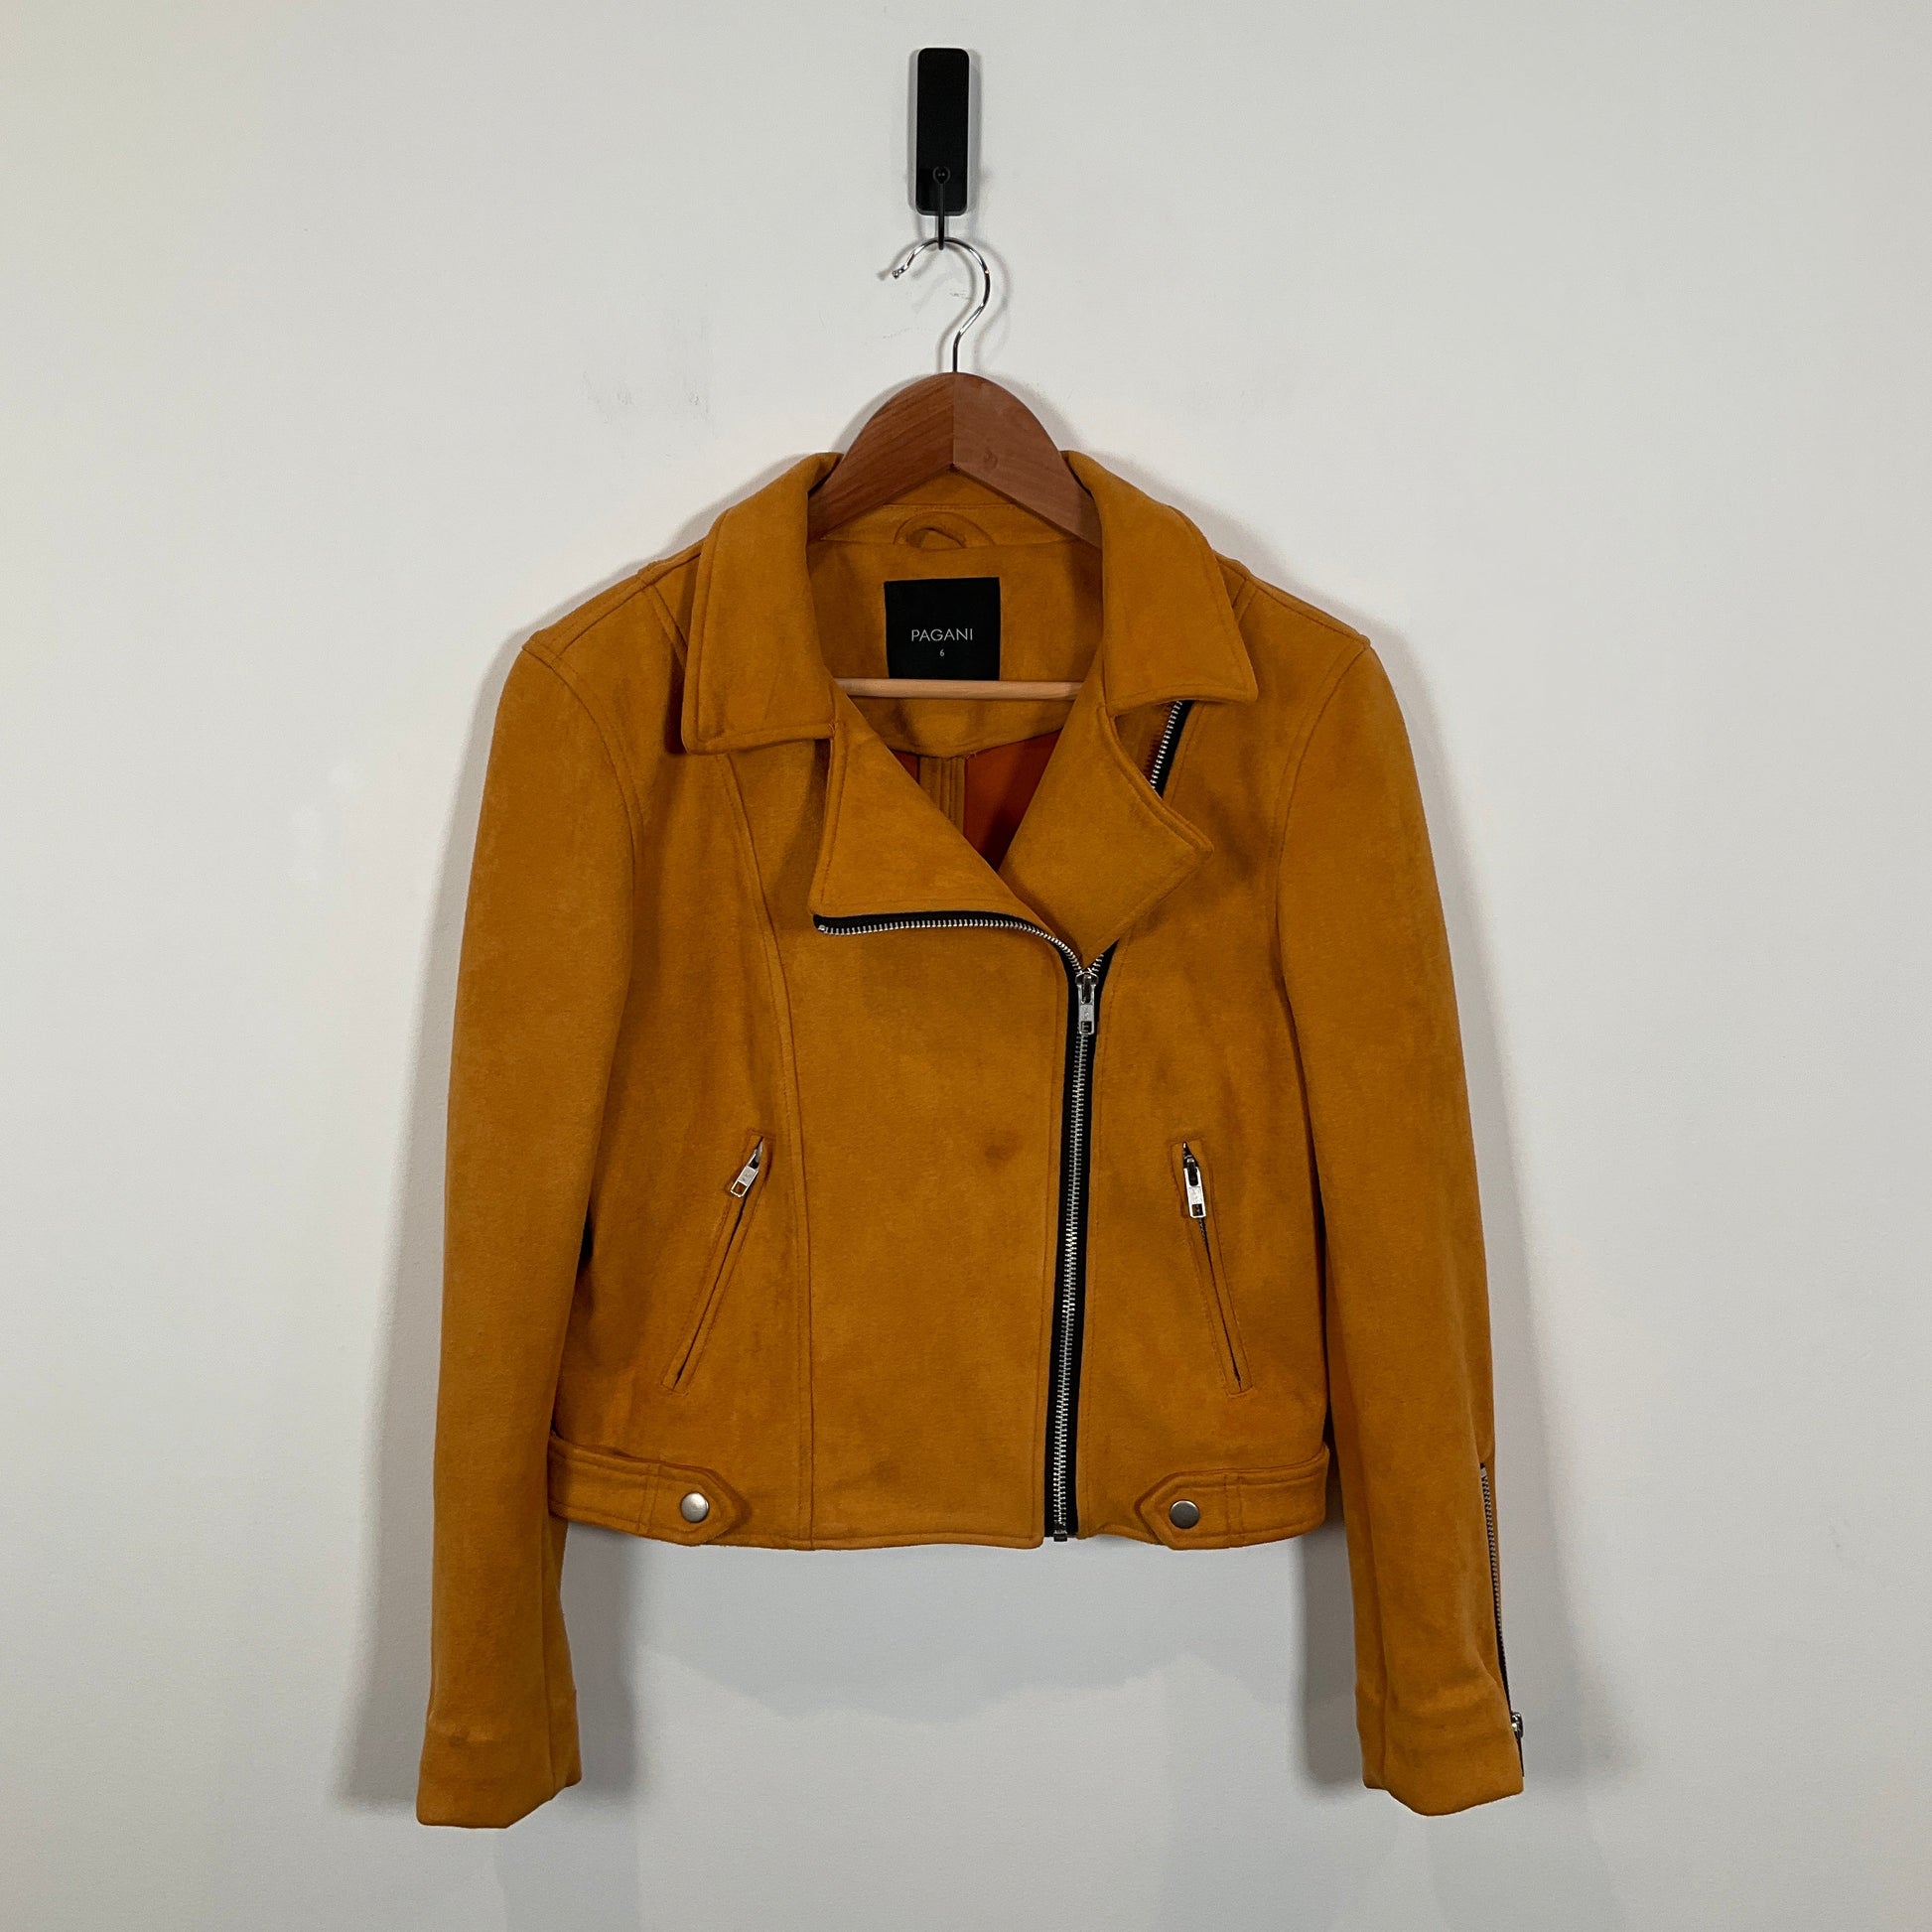 Pagani - Jacket Coats & Jackets